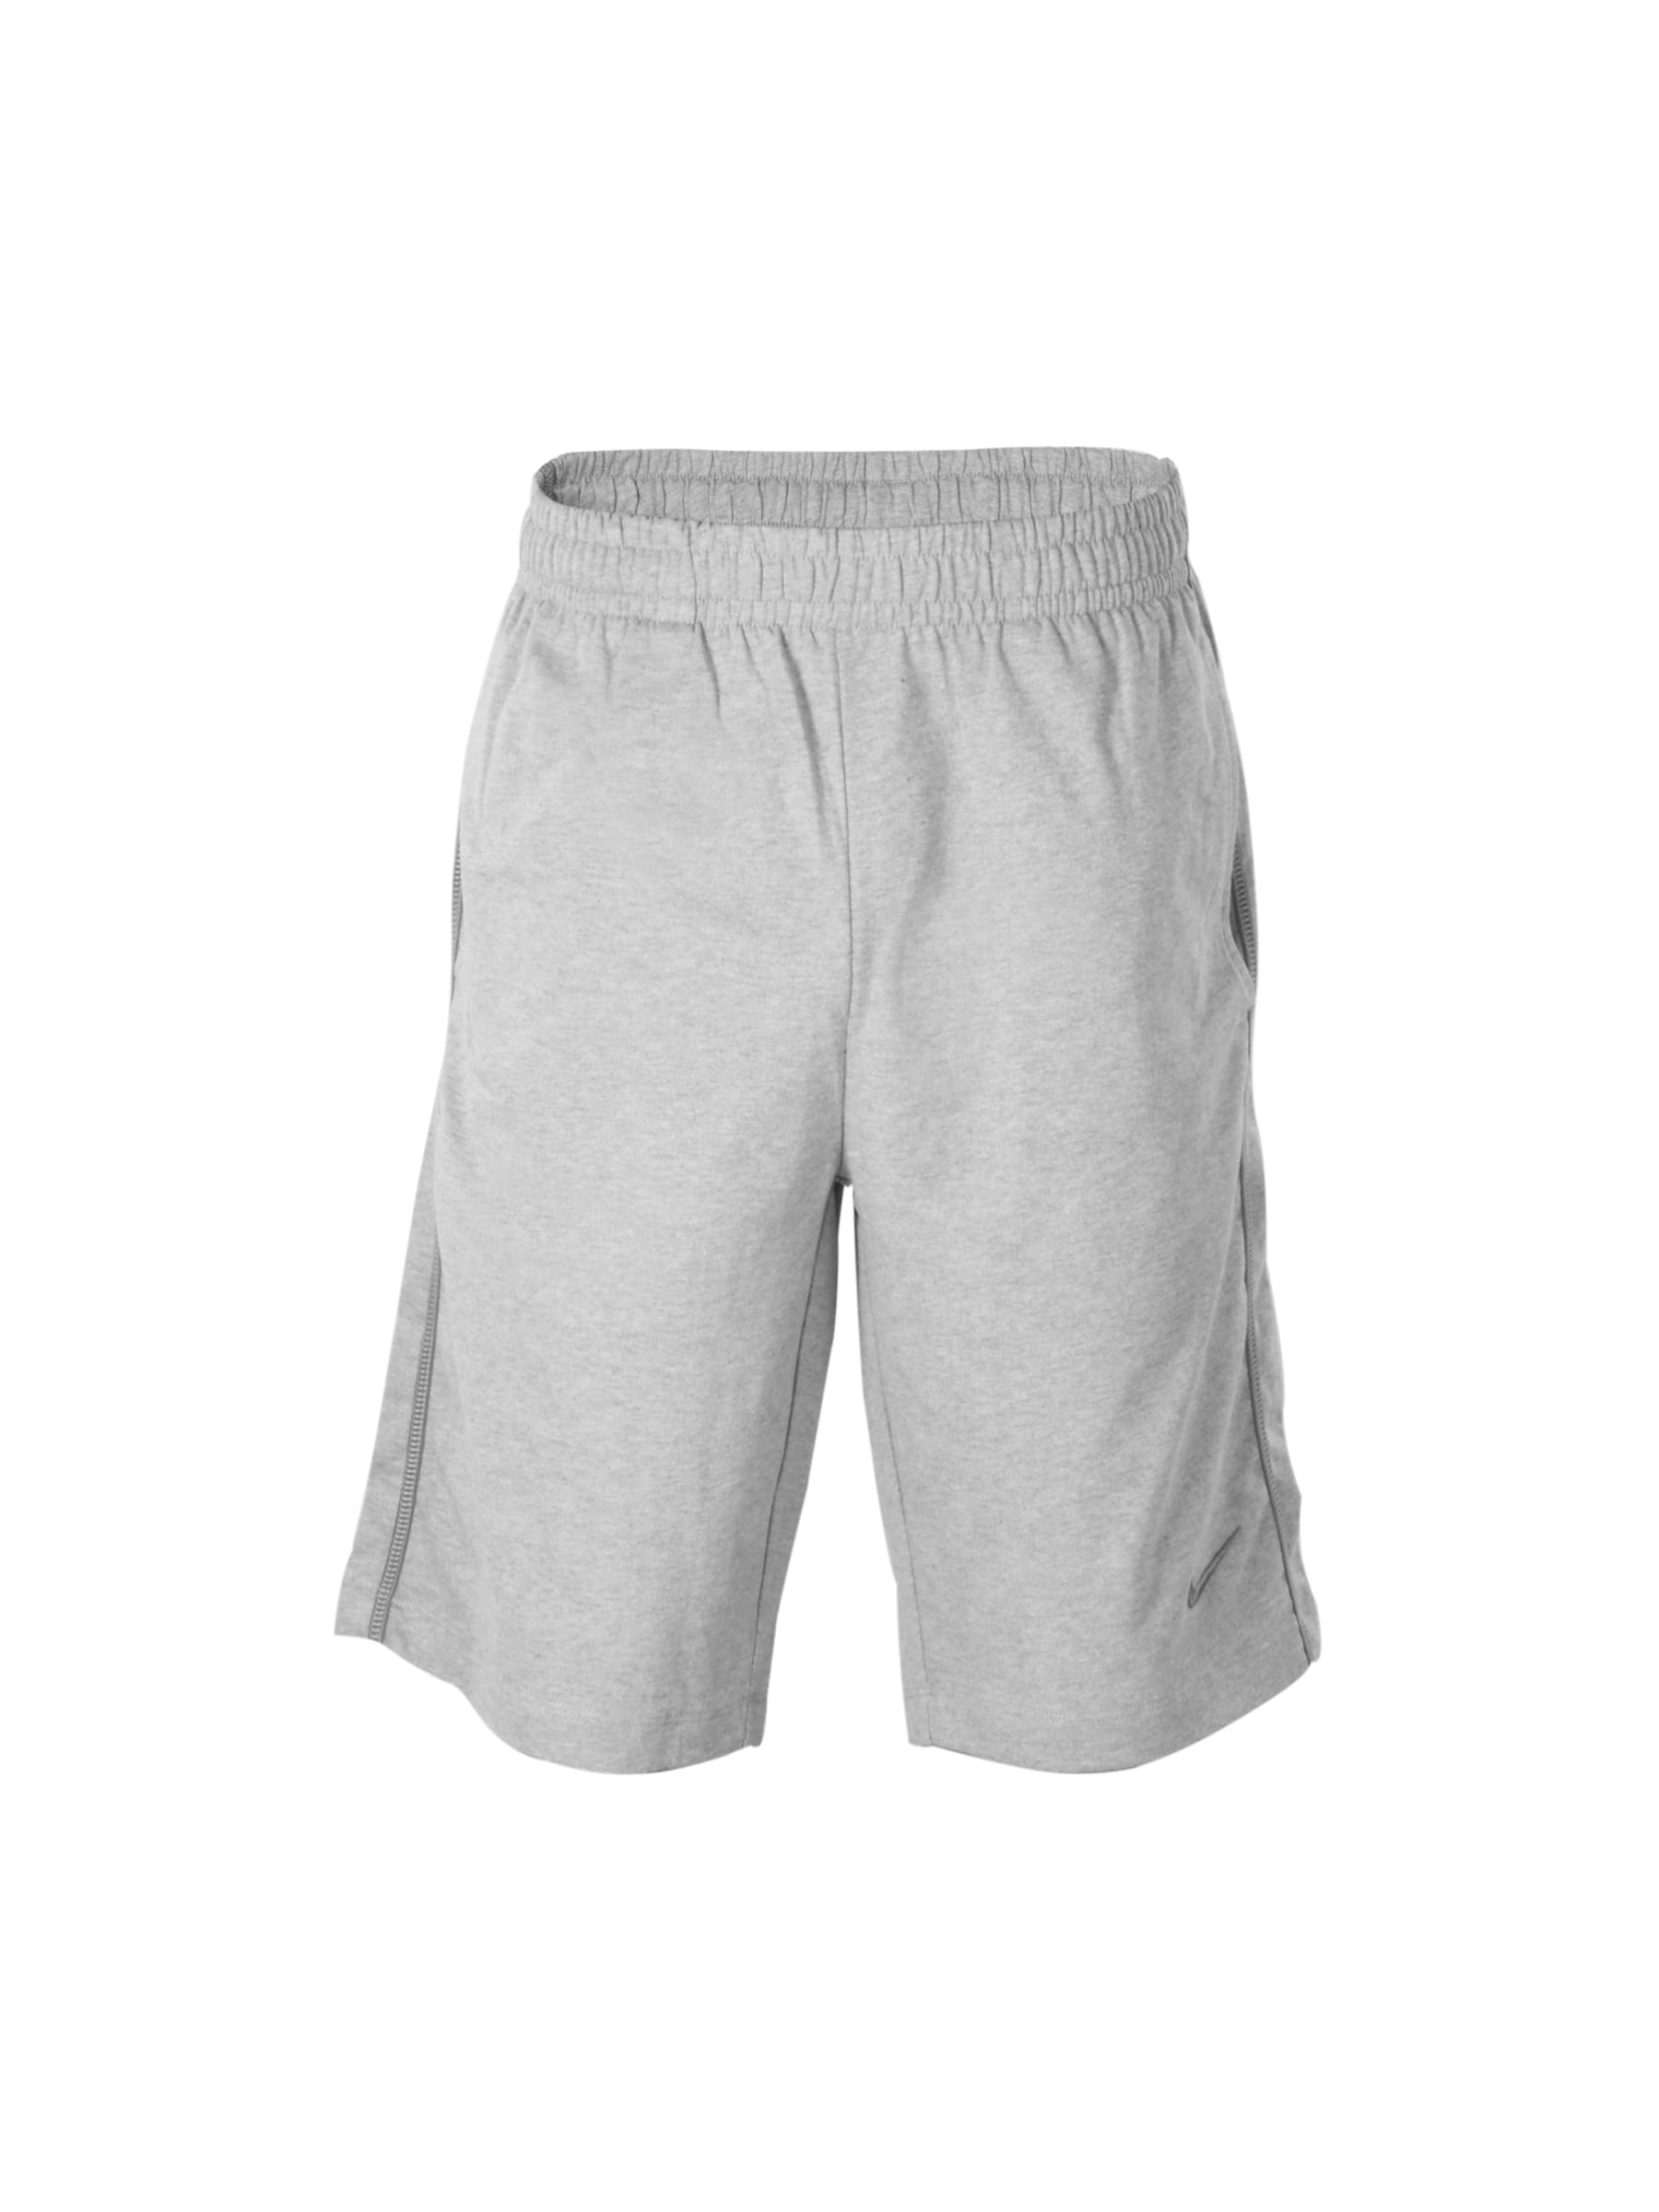 Nike Men Grey Shorts